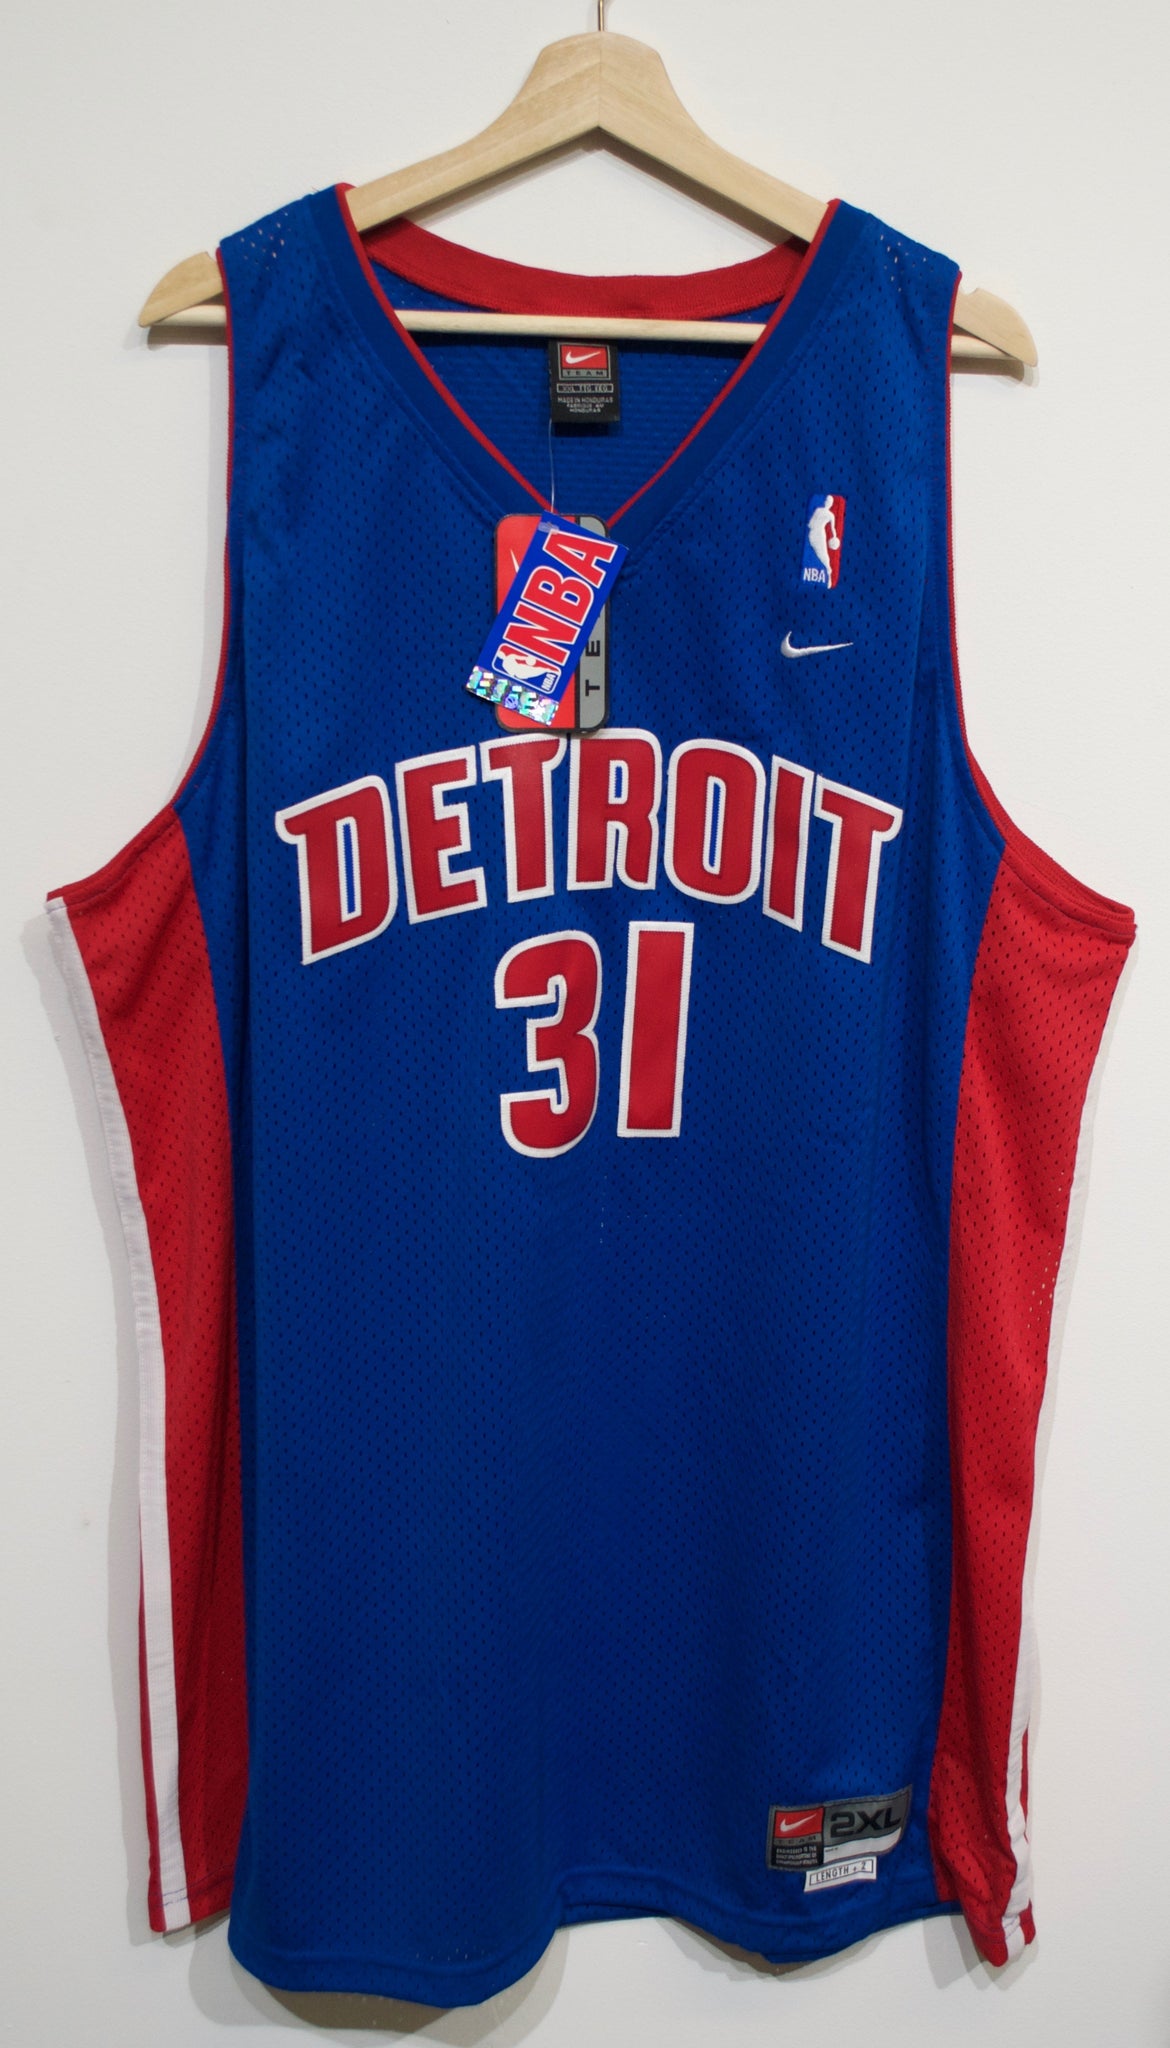 Detroit Pistons Jerseys in Detroit Pistons Team Shop 